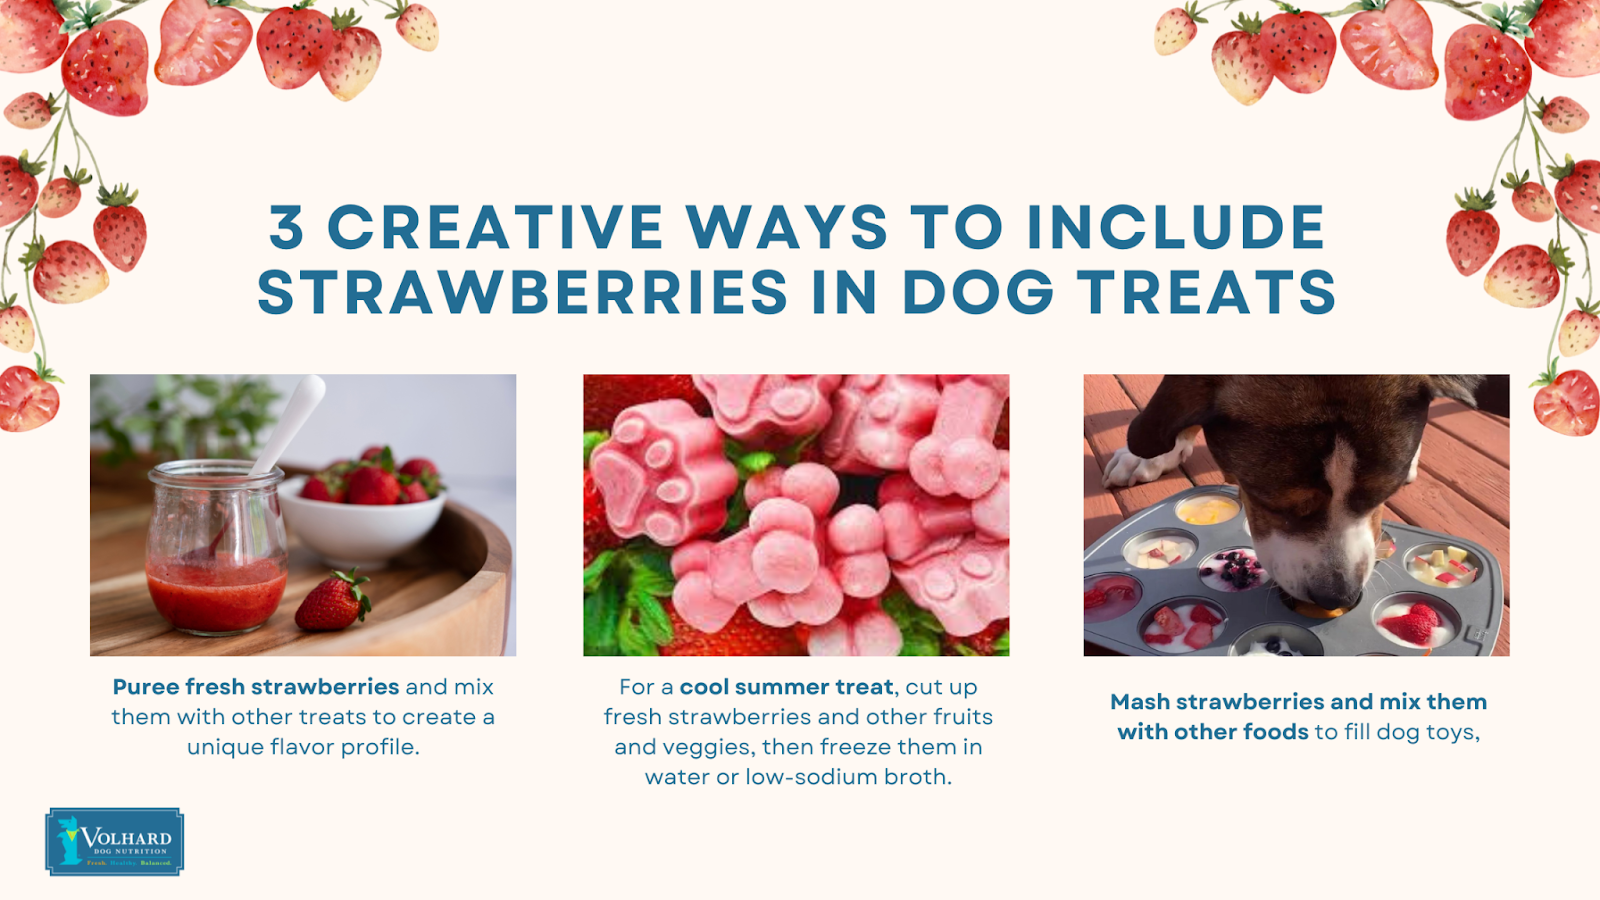 Strawberries in dog treats